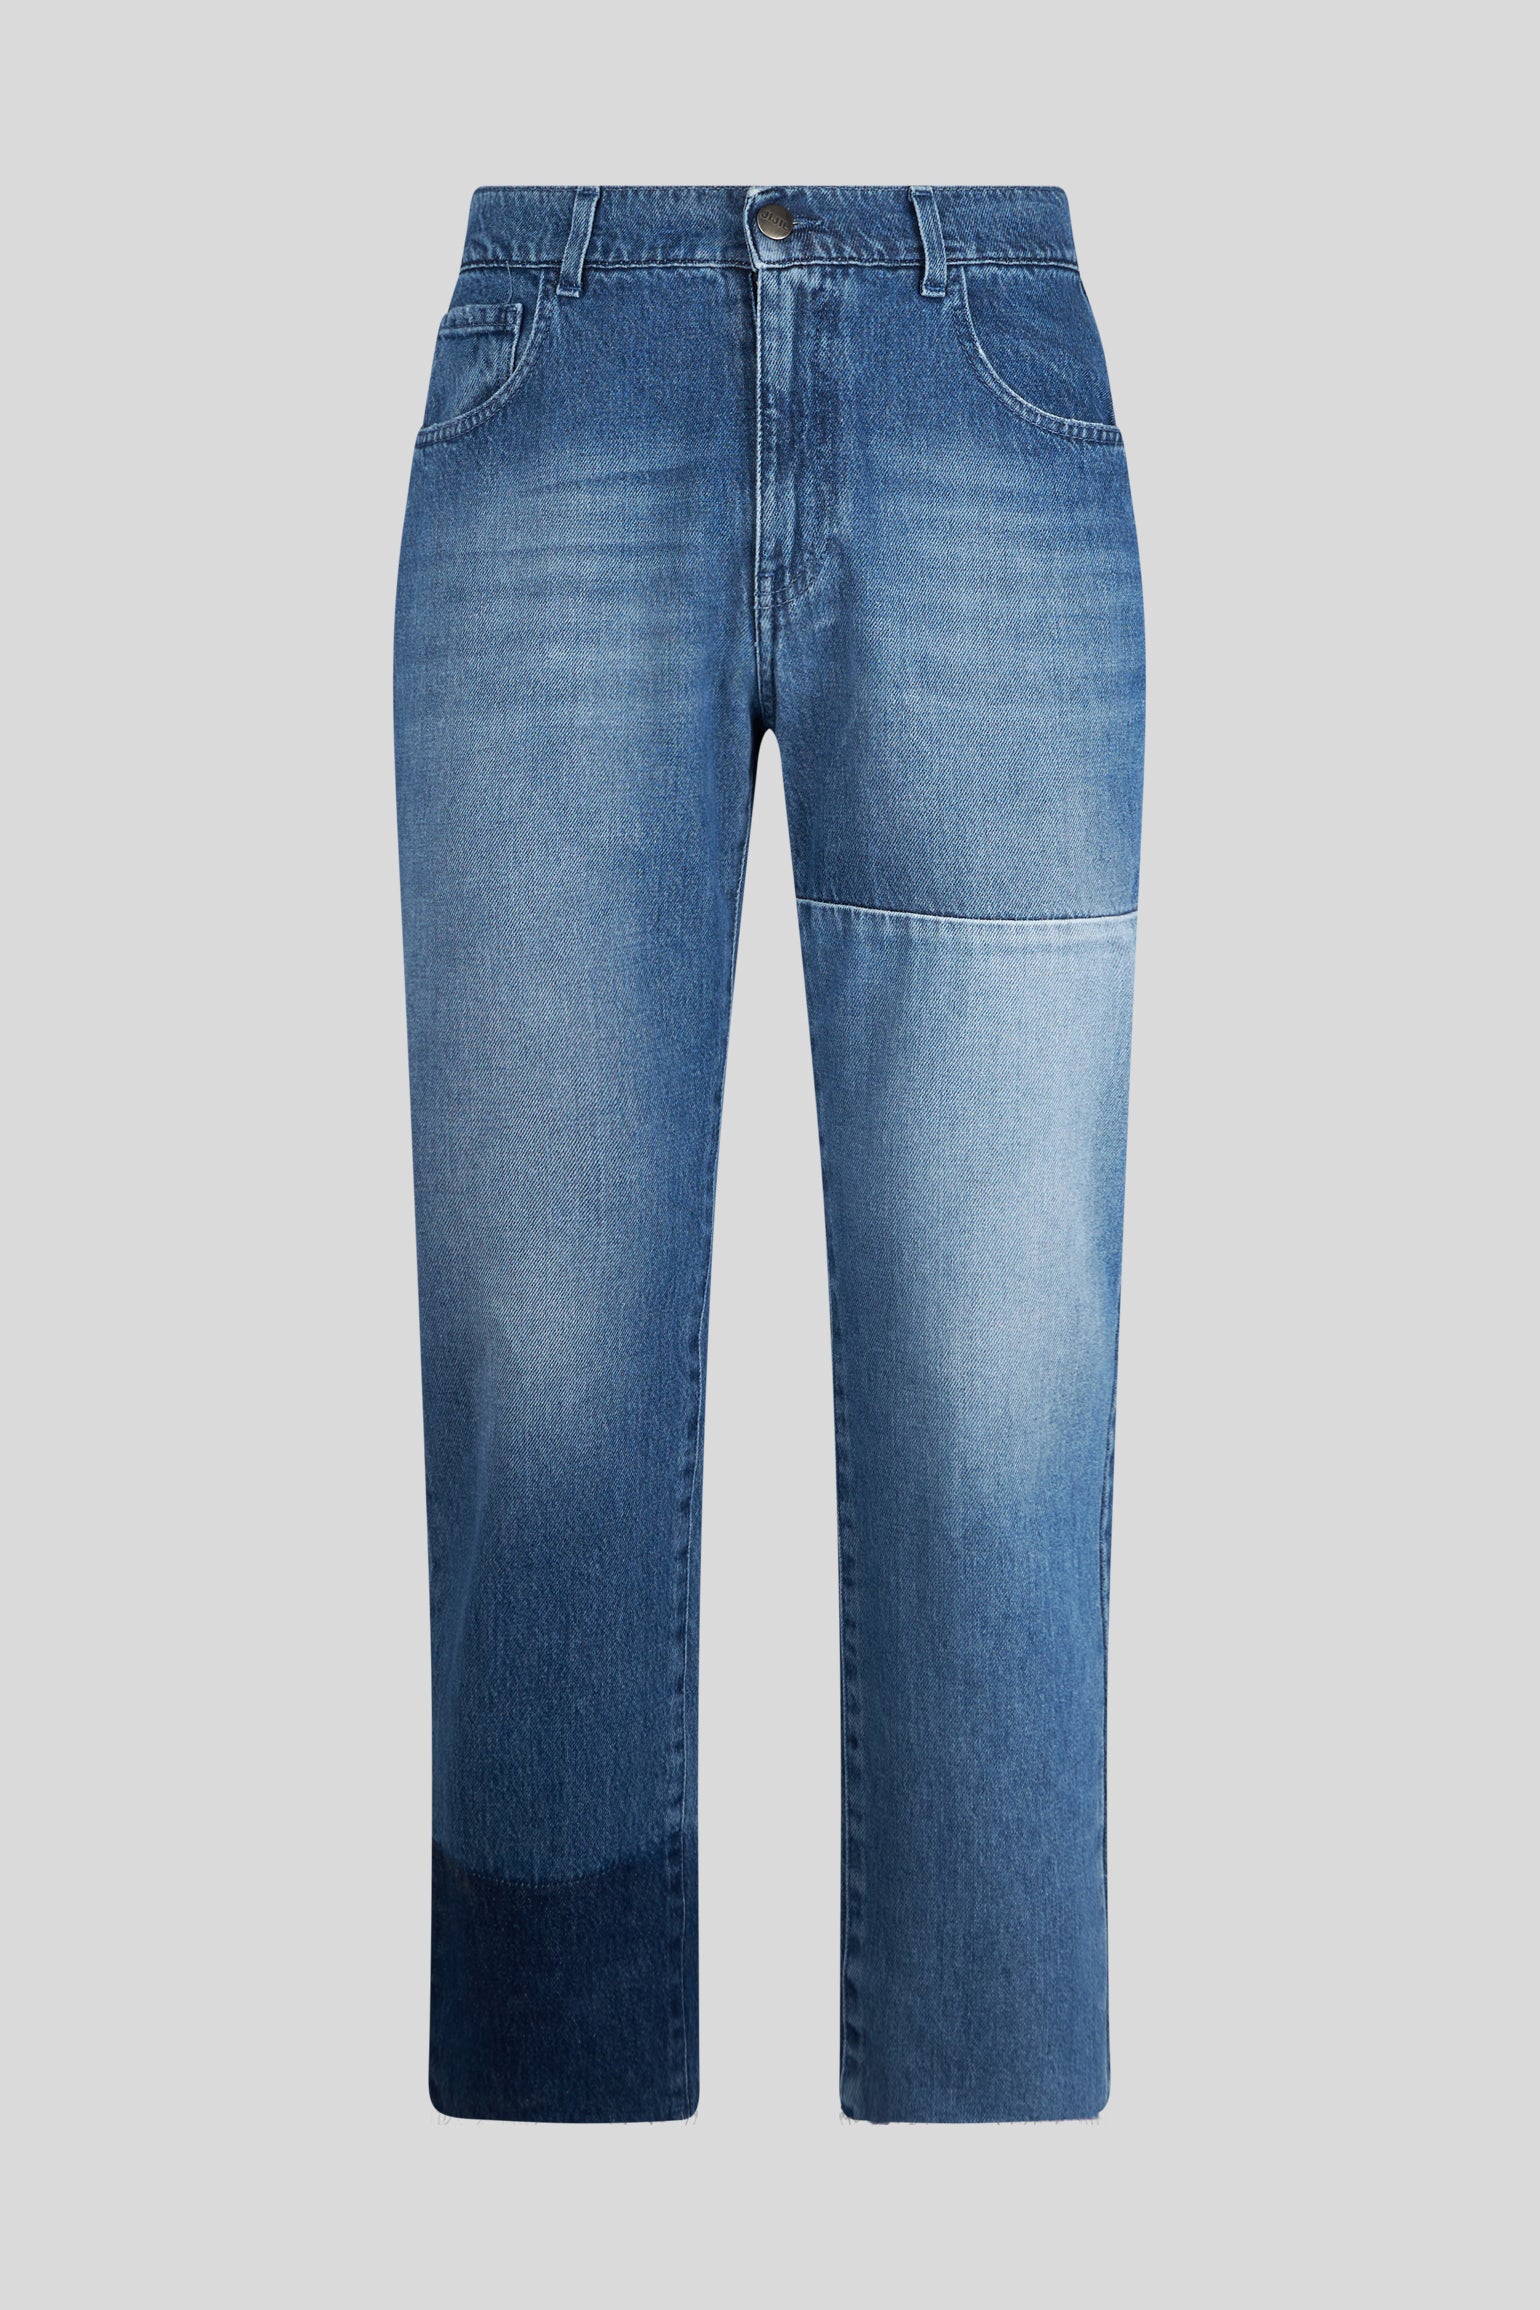 JIJIL Jeans mit normaler Taille zweifarbig